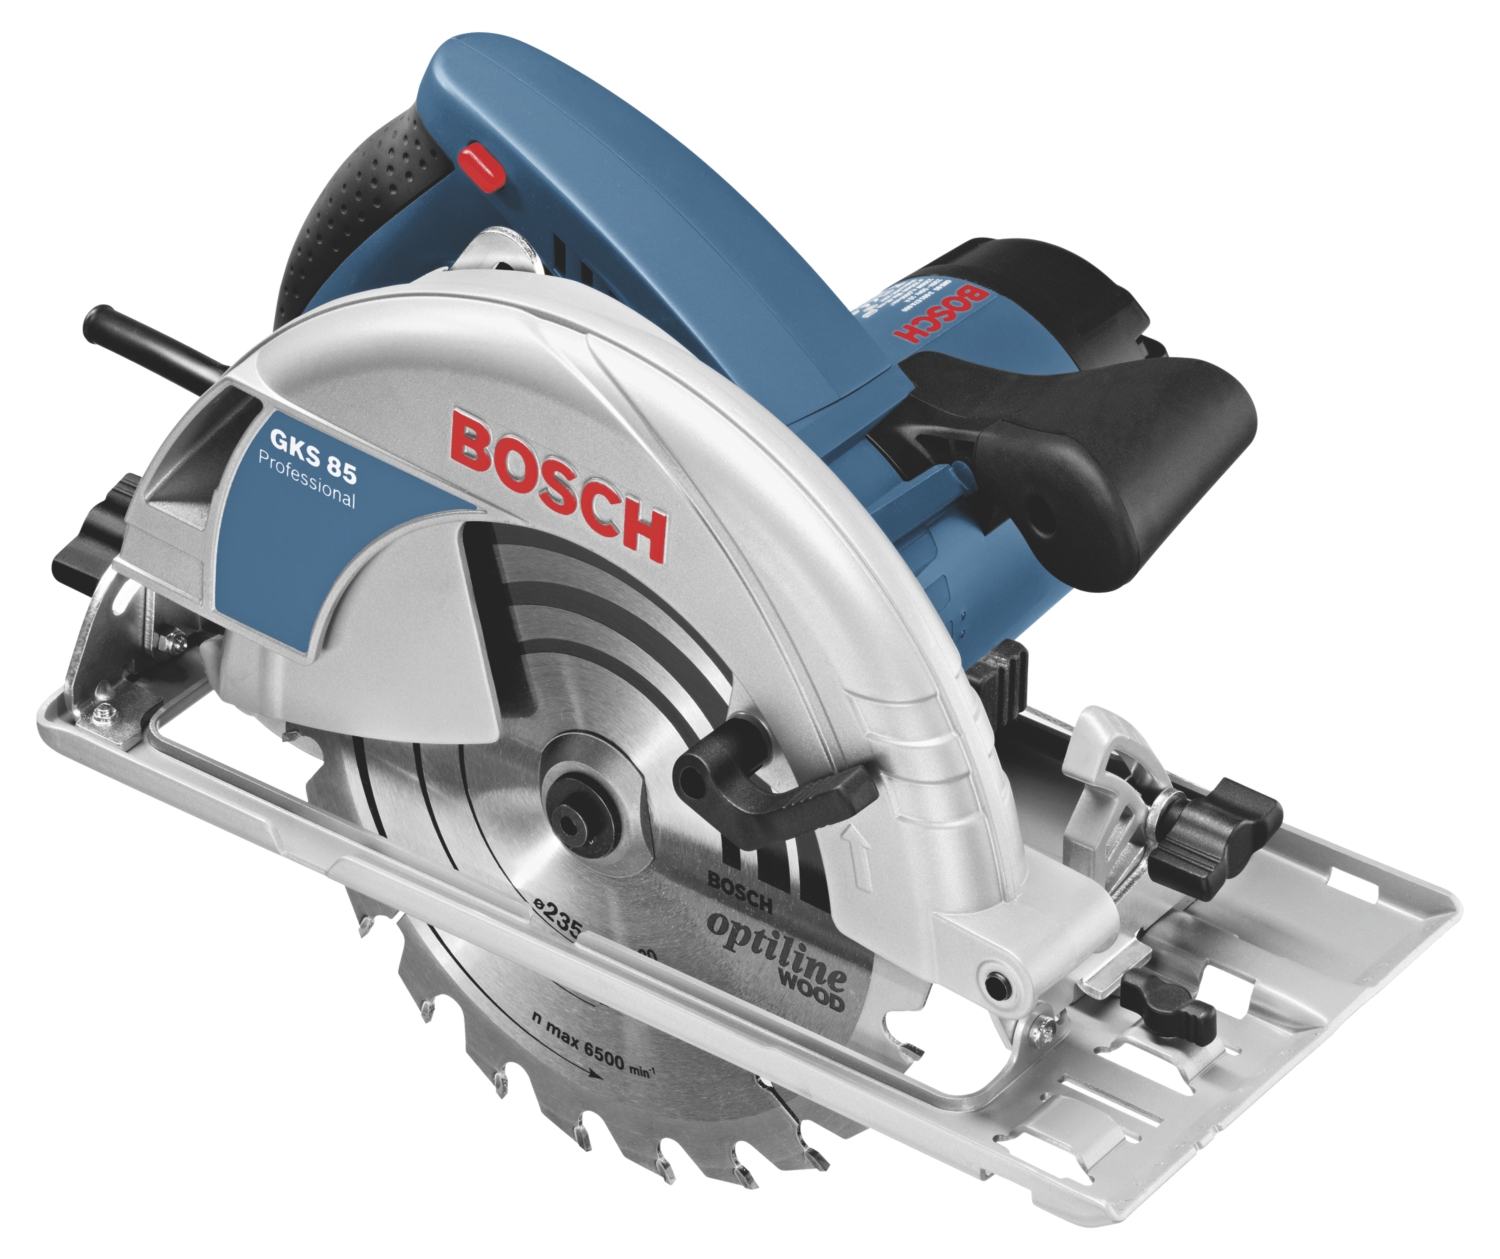 Scie circulaire GKS 85 Bosch Professional